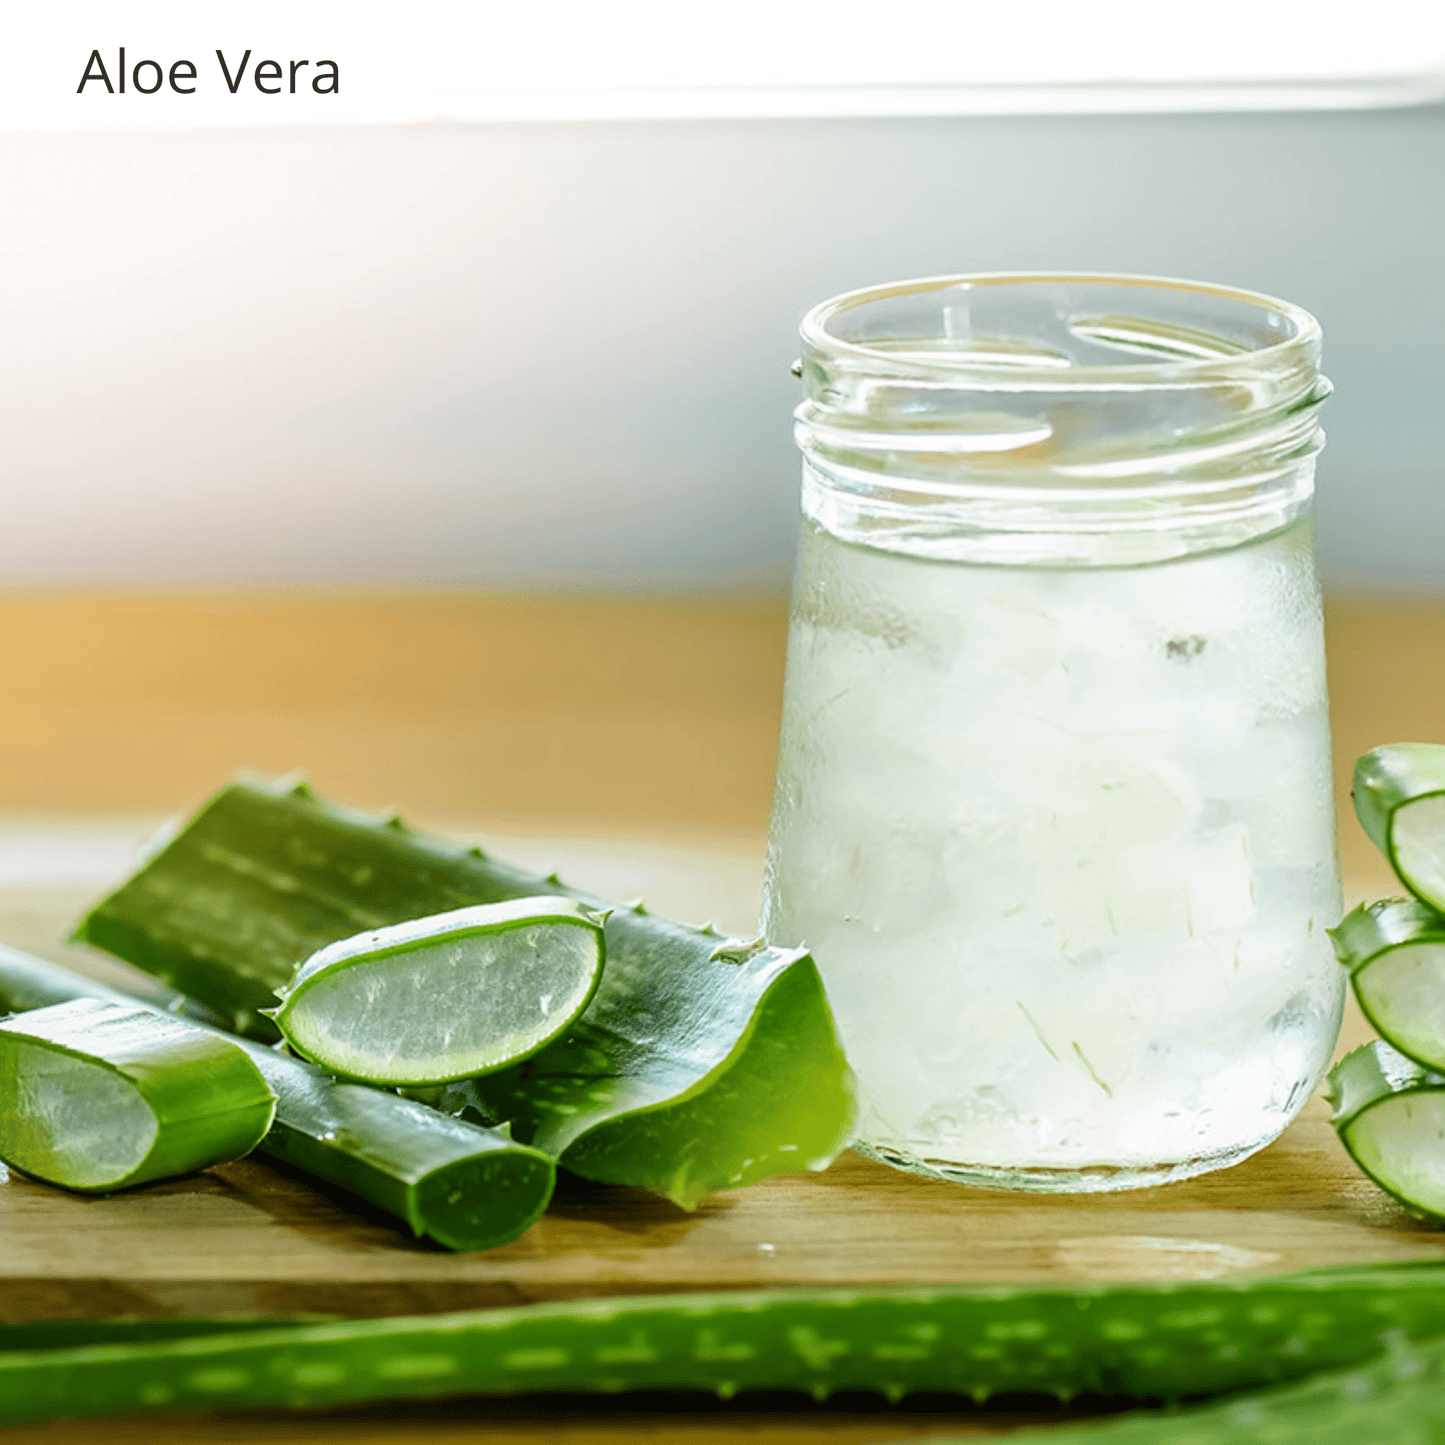 Be Green Bath and Body Shaving Foam contains aloe vera